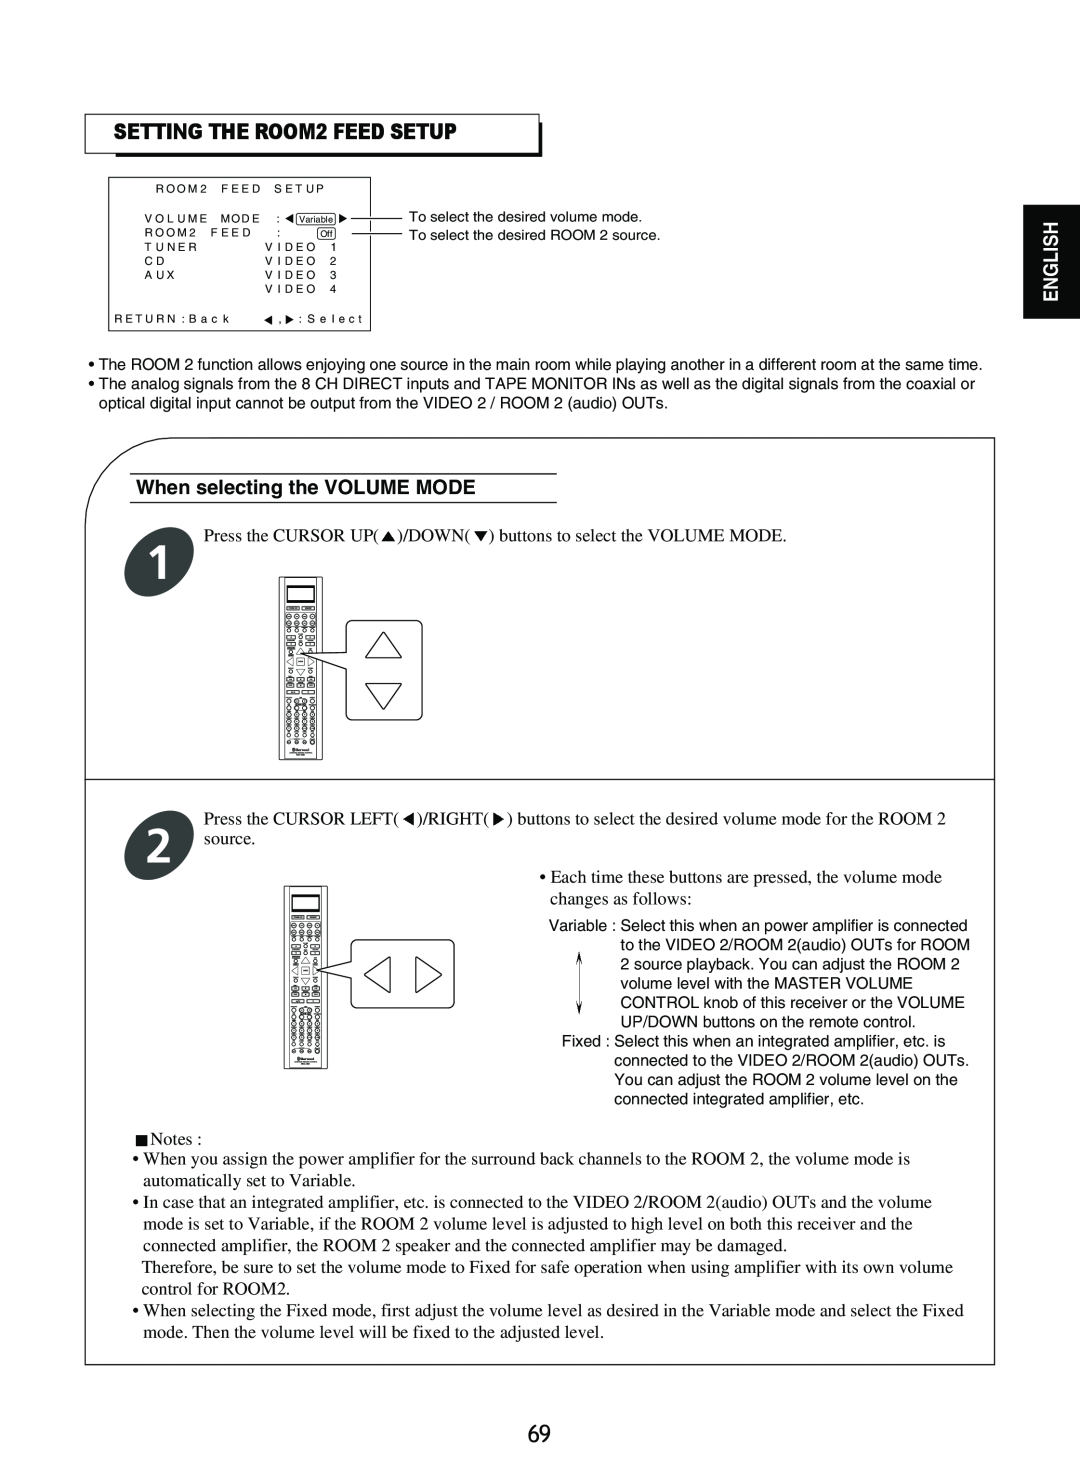 Sherwood R-865 manual SETTING THE ROOM2 FEED SETUP, When selecting the VOLUME MODE, English 